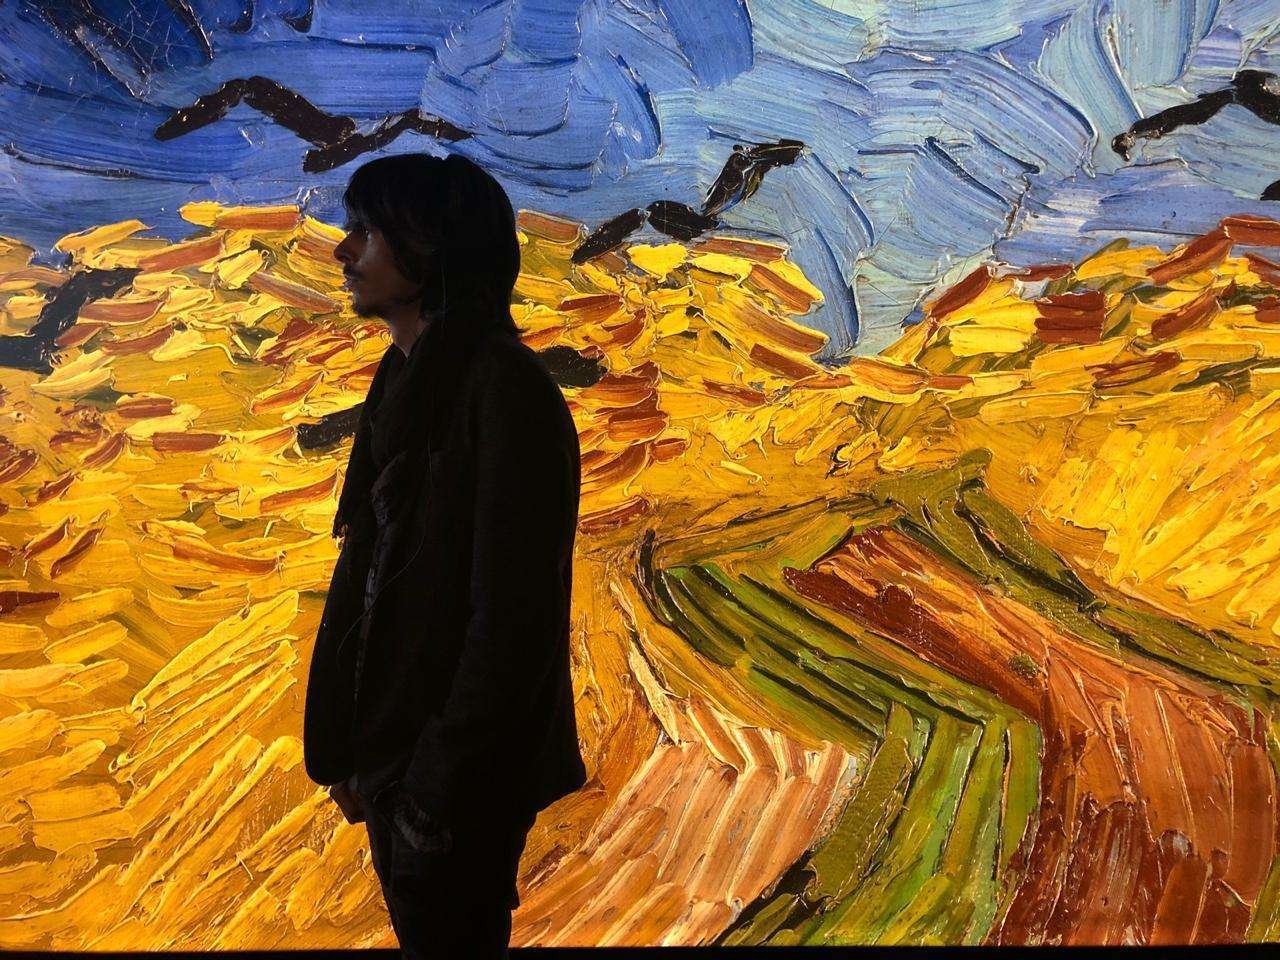 Meeting Vincent Van Gogh